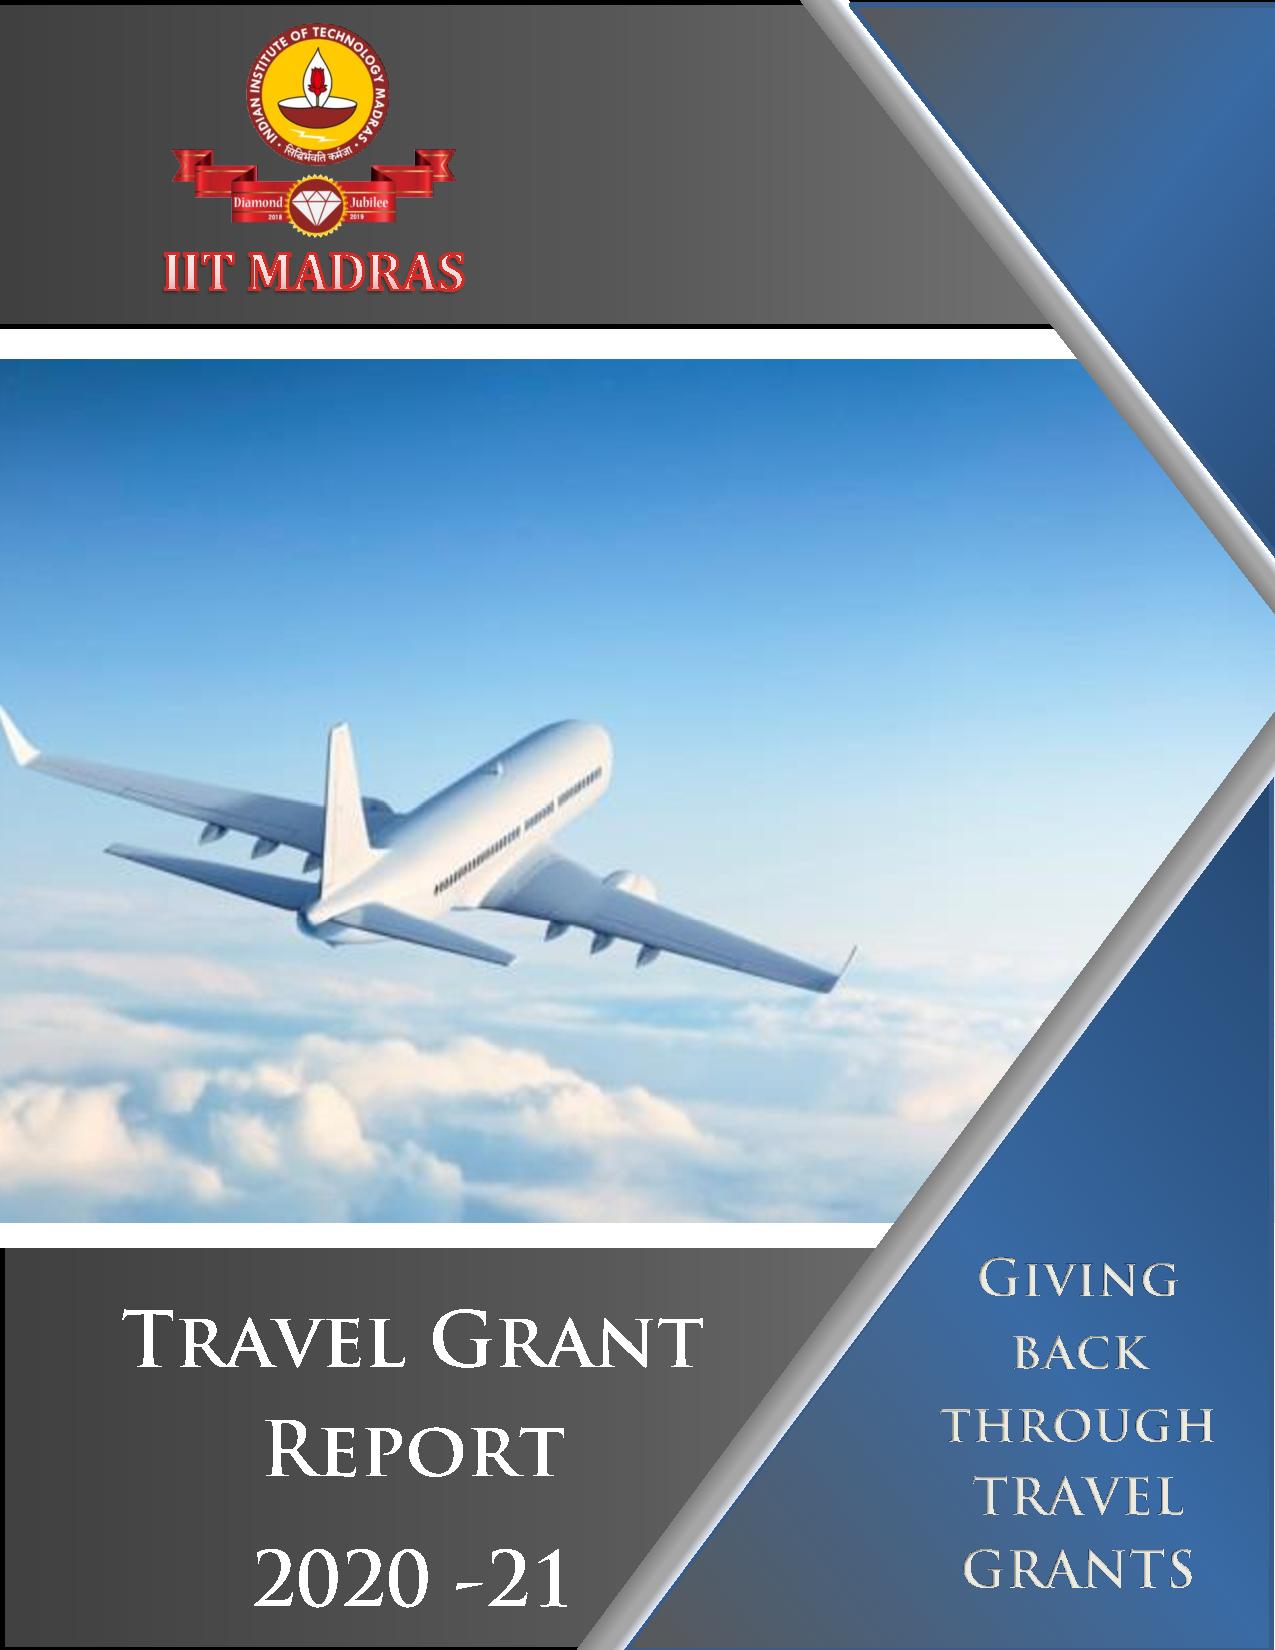 Travel Grant